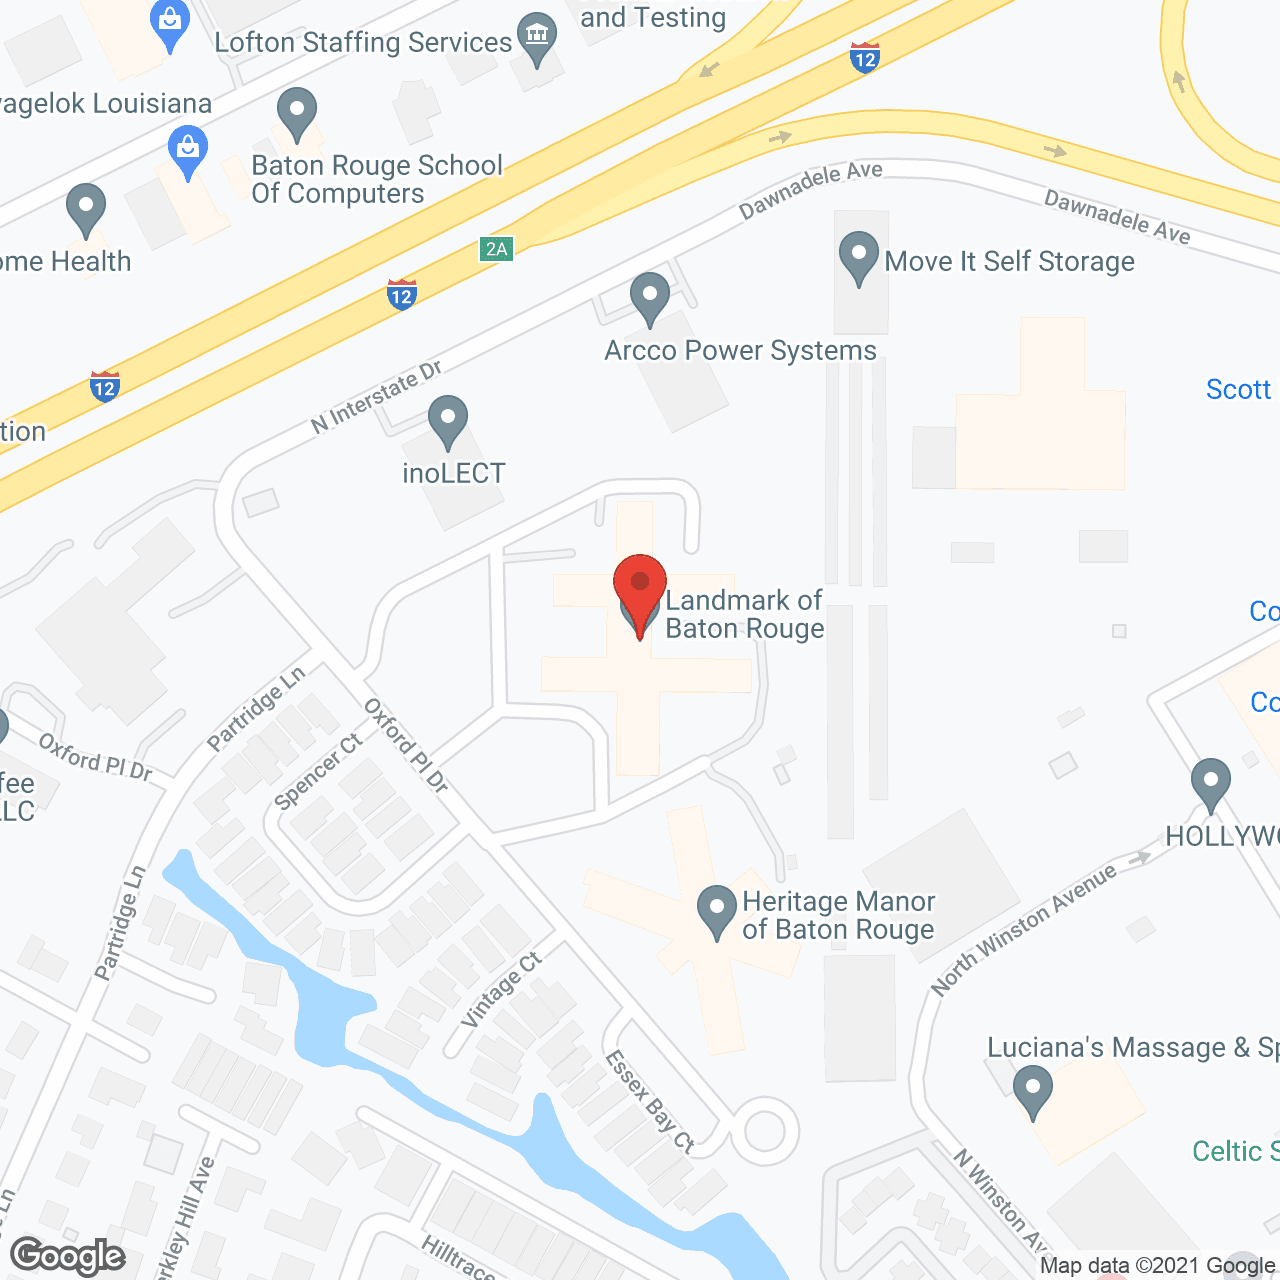 Landmark of Baton Rouge in google map